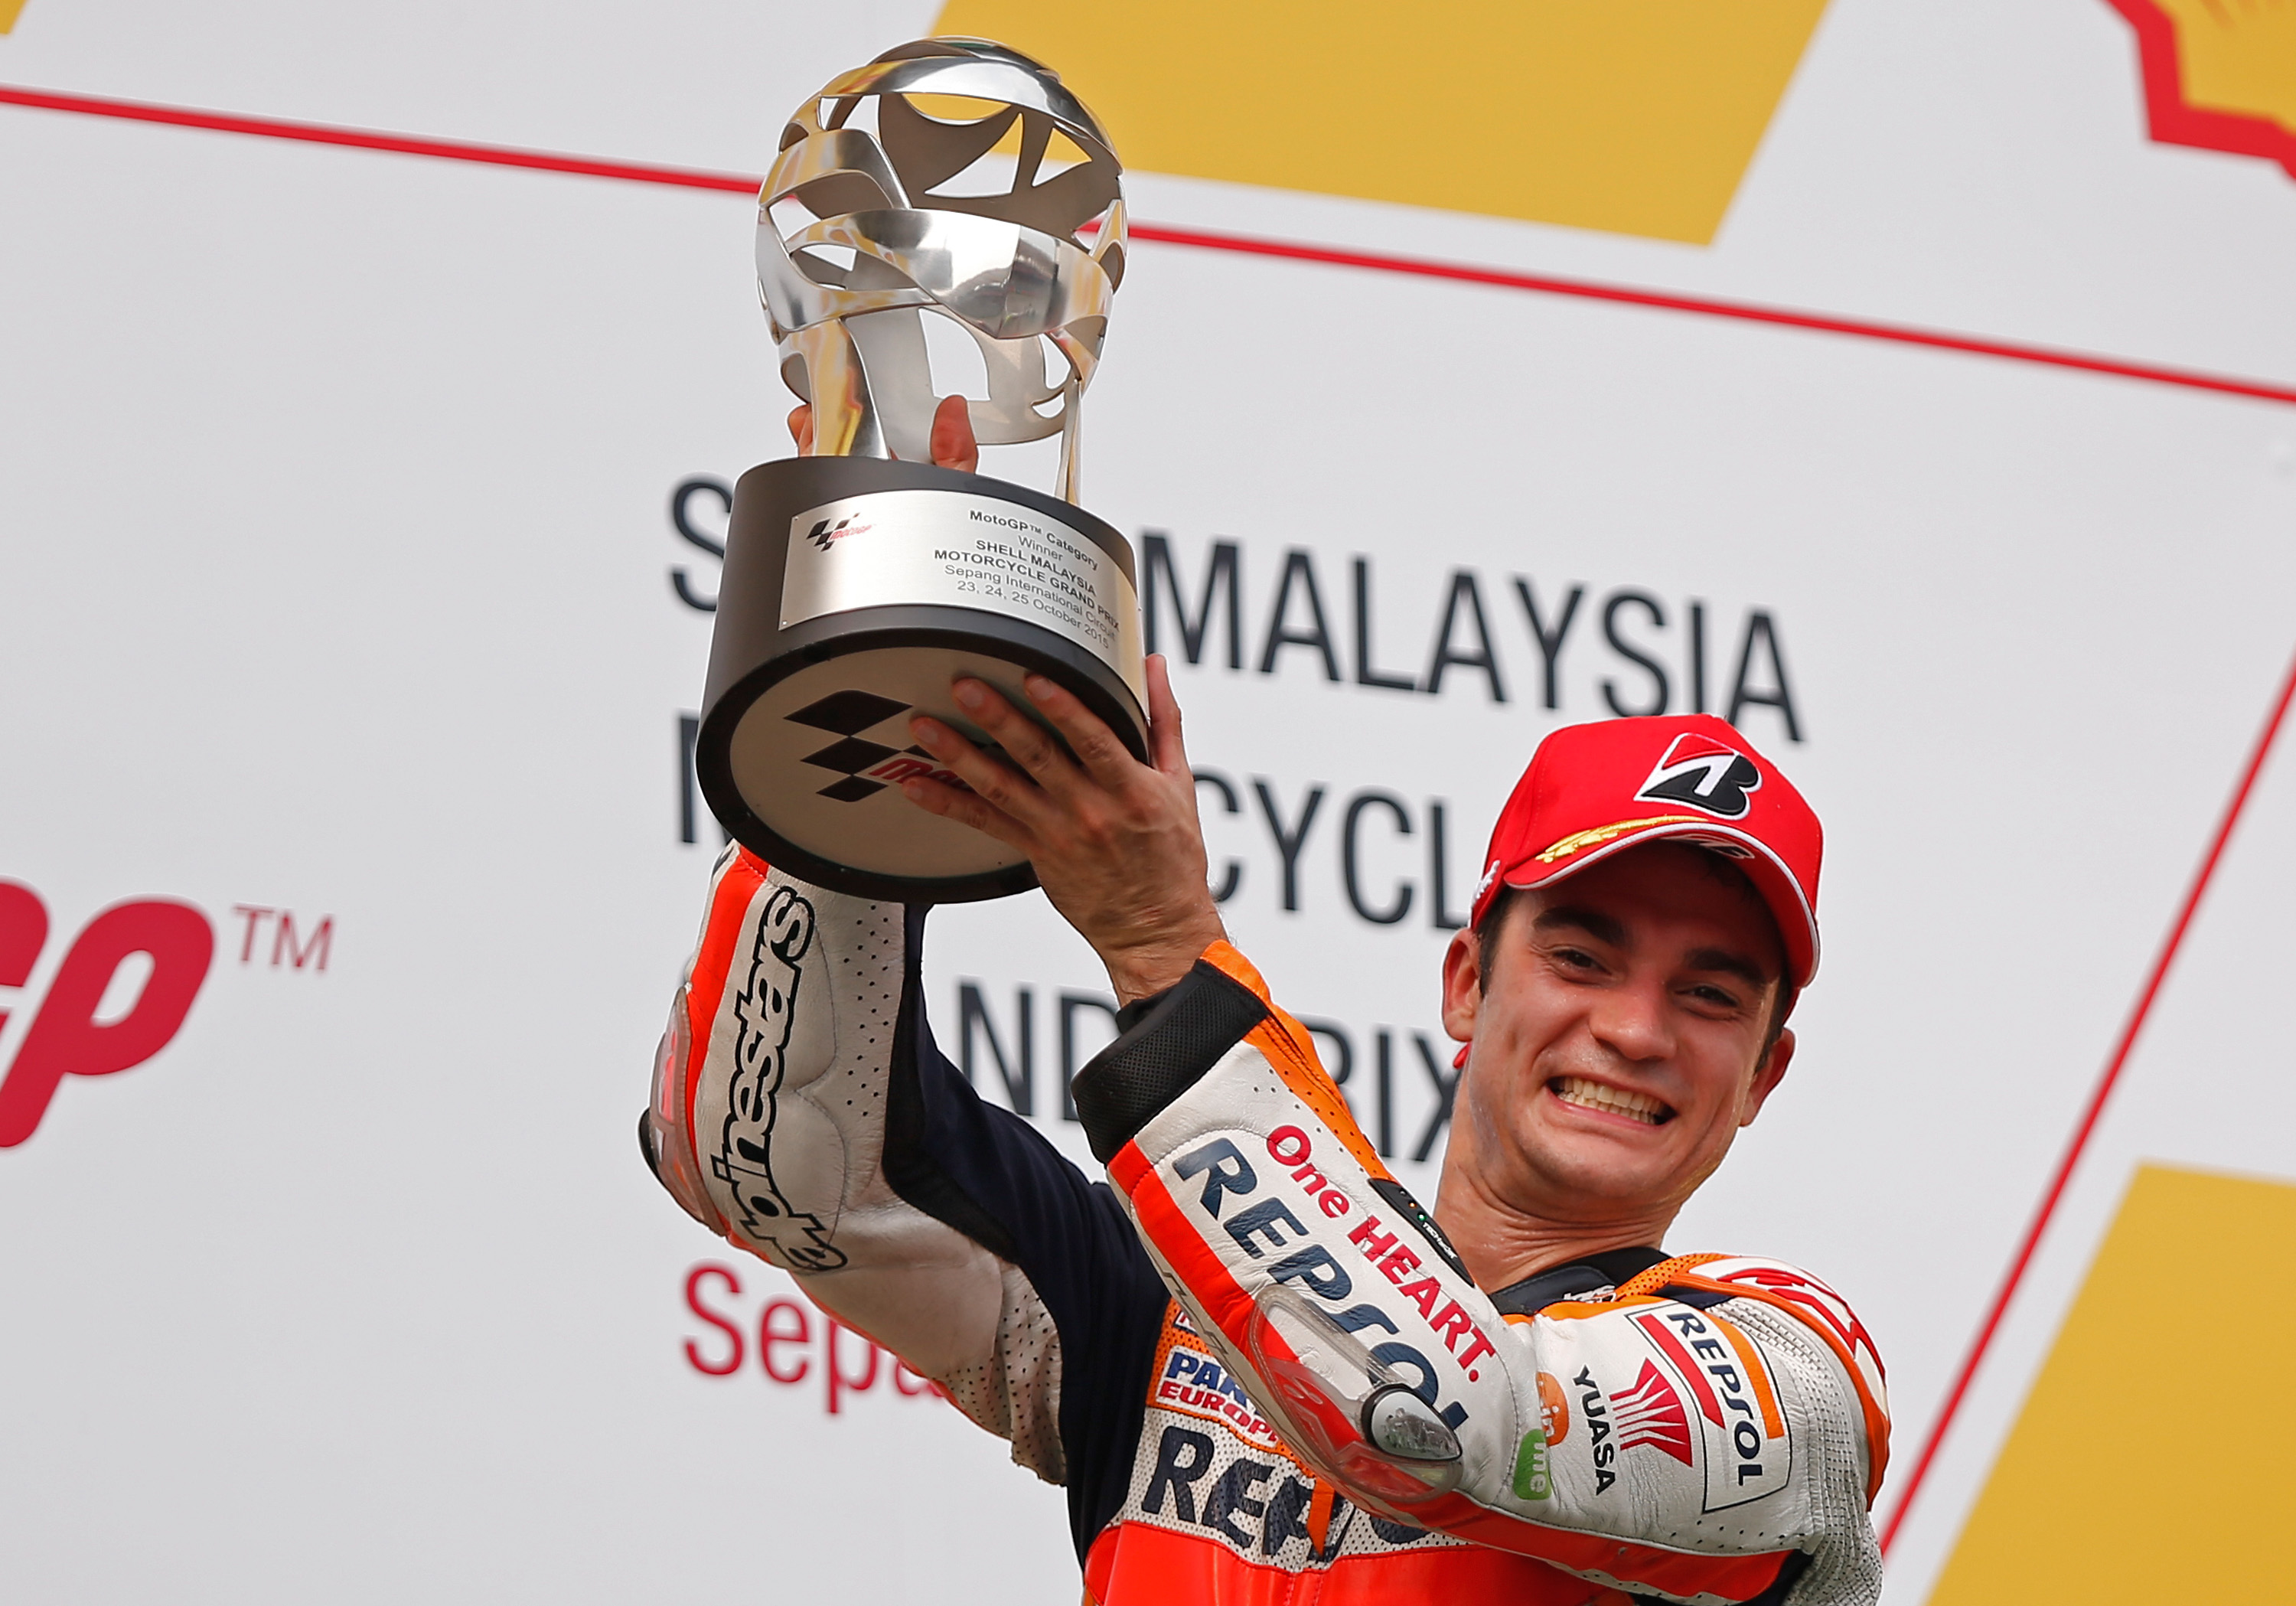 MotoGP – Μαλαισία 2015: Νίκη Pedrosa, πτώση για Marquez, ποινή για Rossi